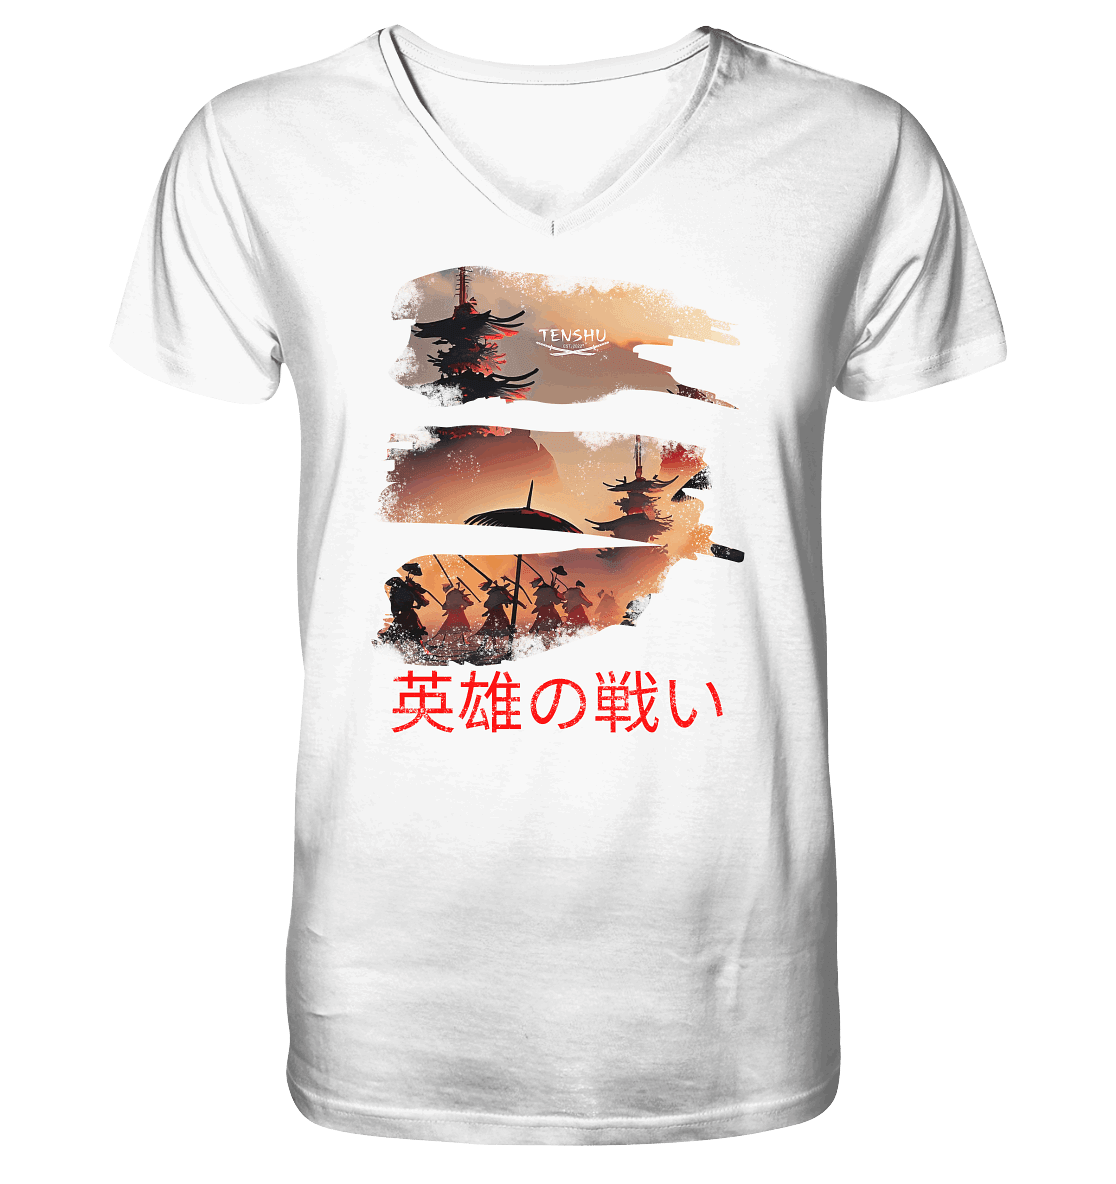 Tenshu / Schlacht der Helden - Mens Organic V-Neck Shirt